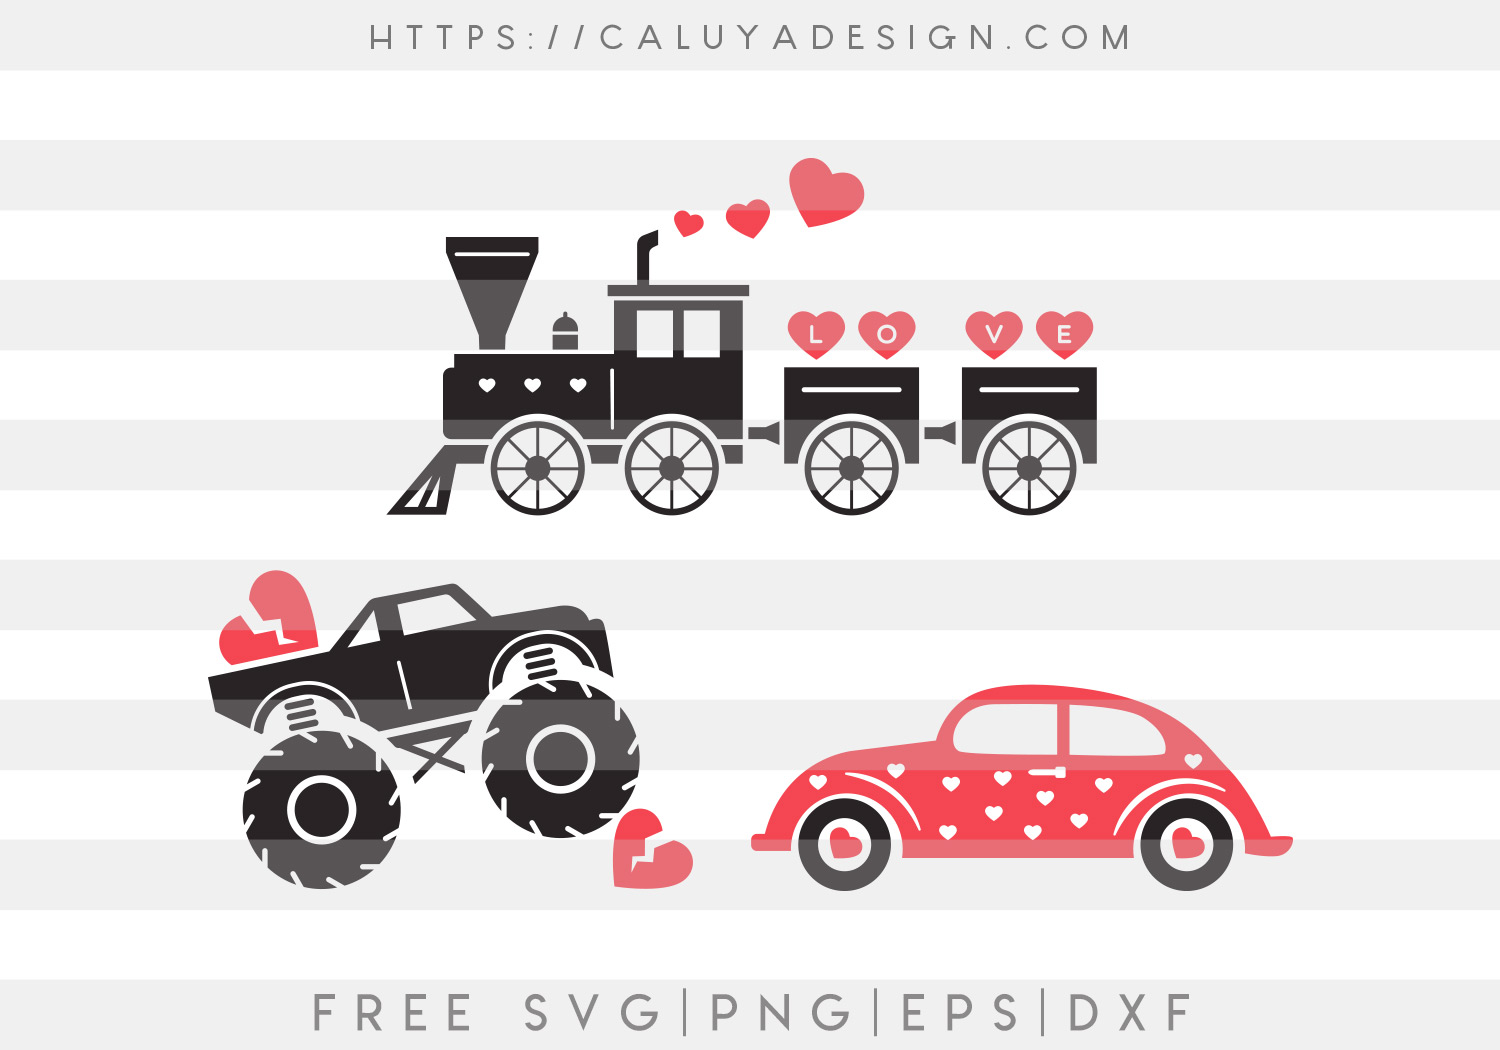 Valentine Vehicles SVG, PNG, EPS & DXF